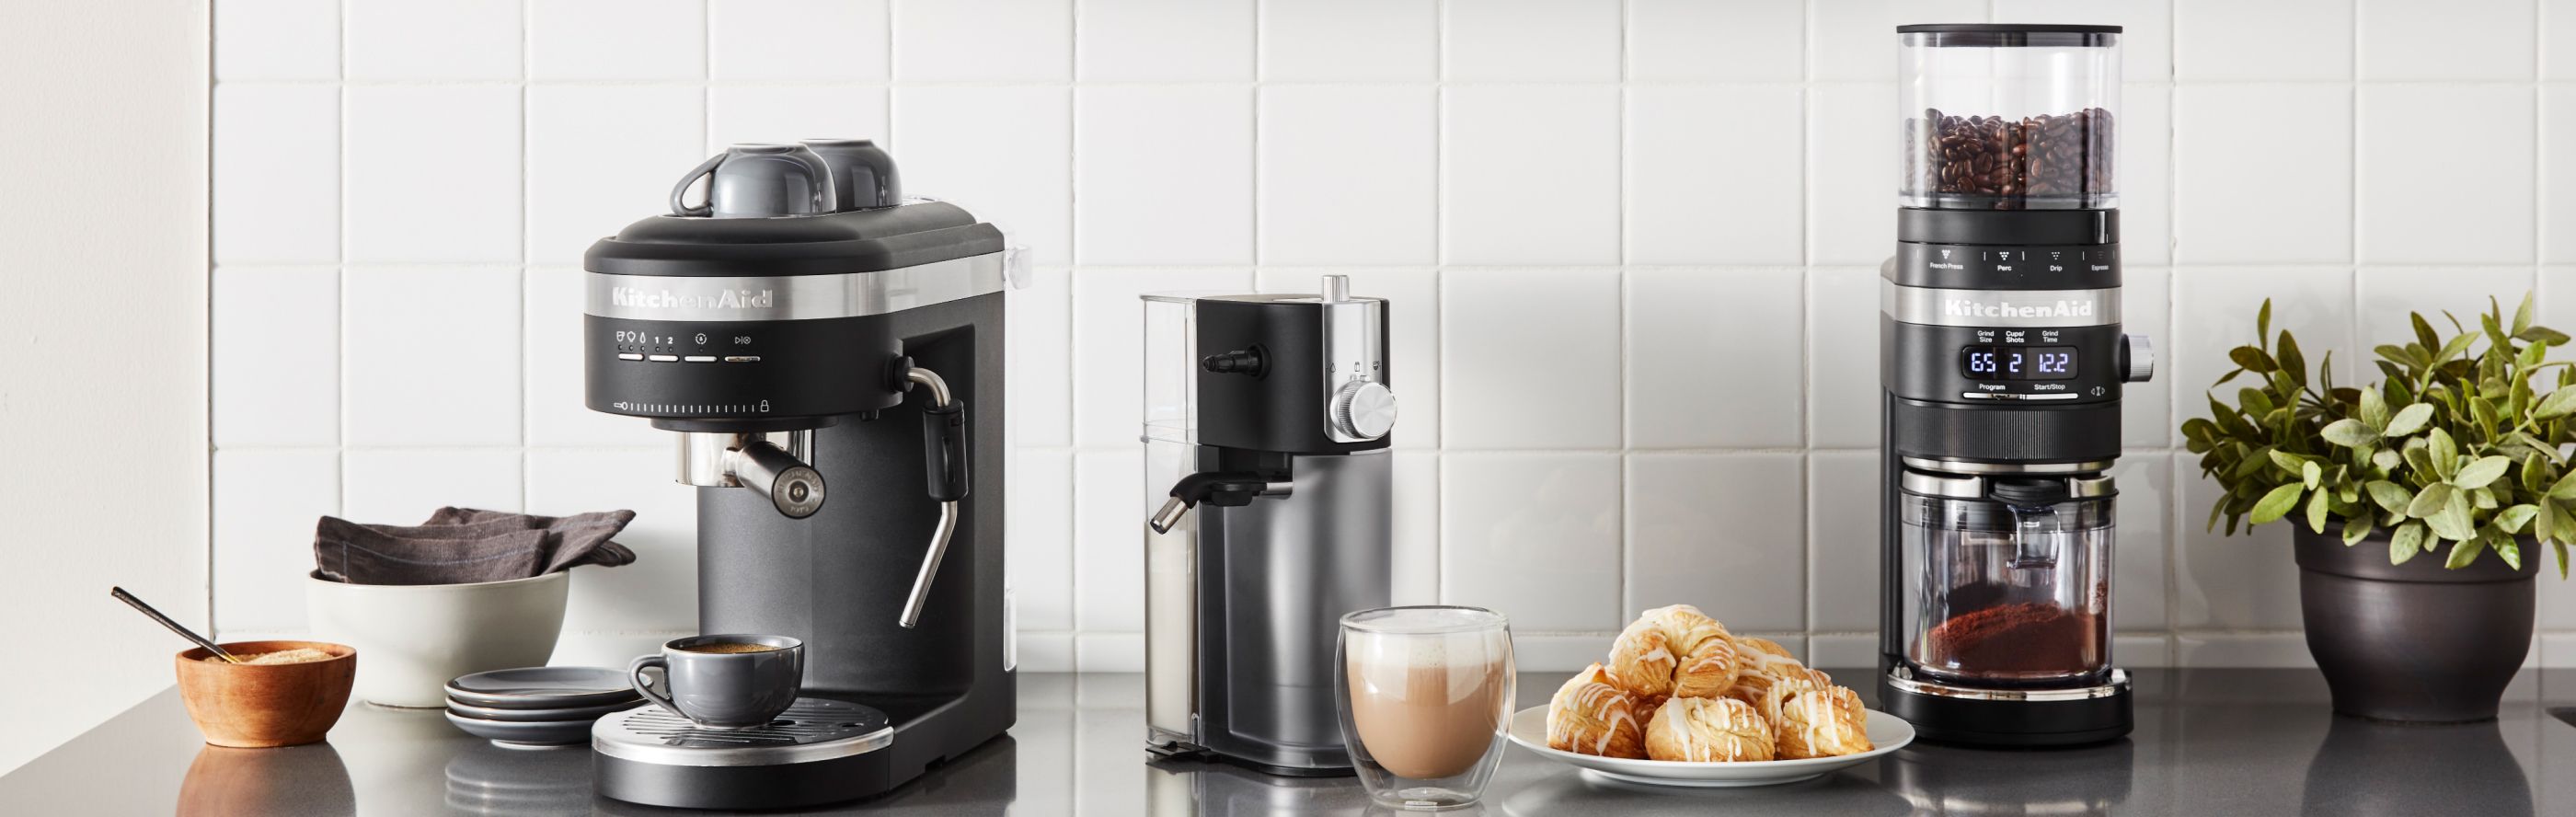 KitchenAid® coffee appliances on a countertop